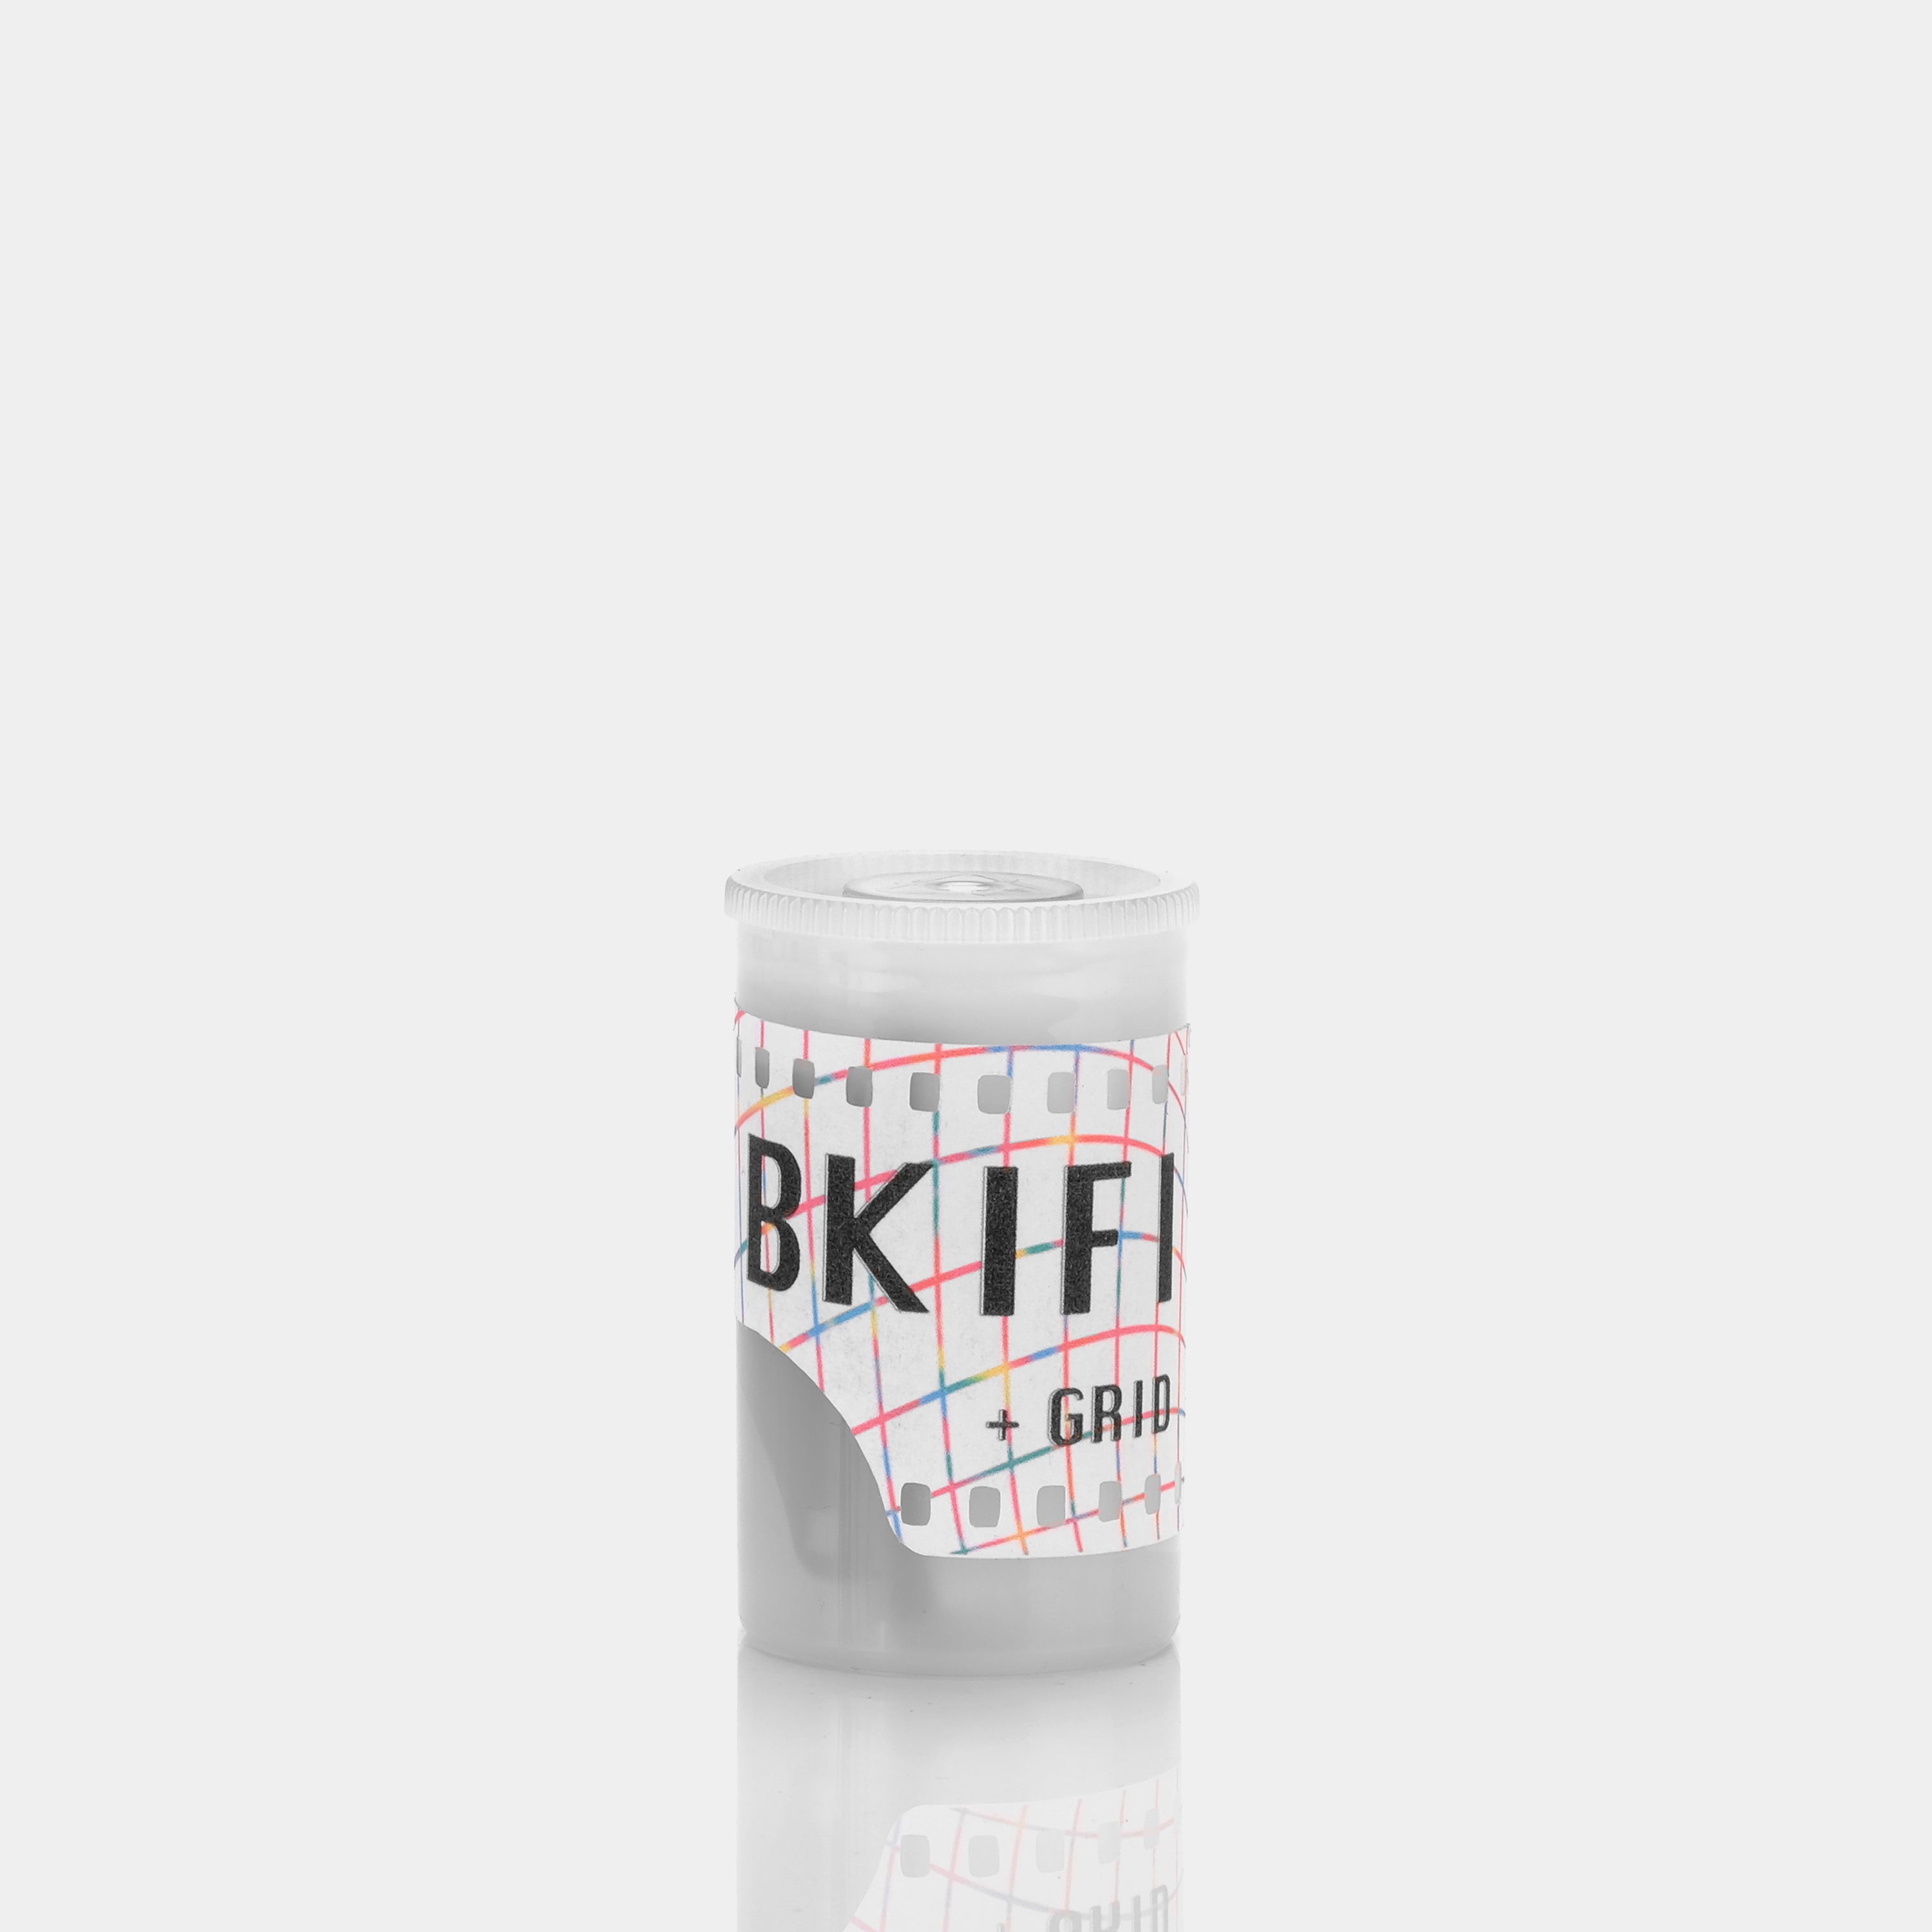 BKIFI + Grid 35mm Film (24 Exposures)